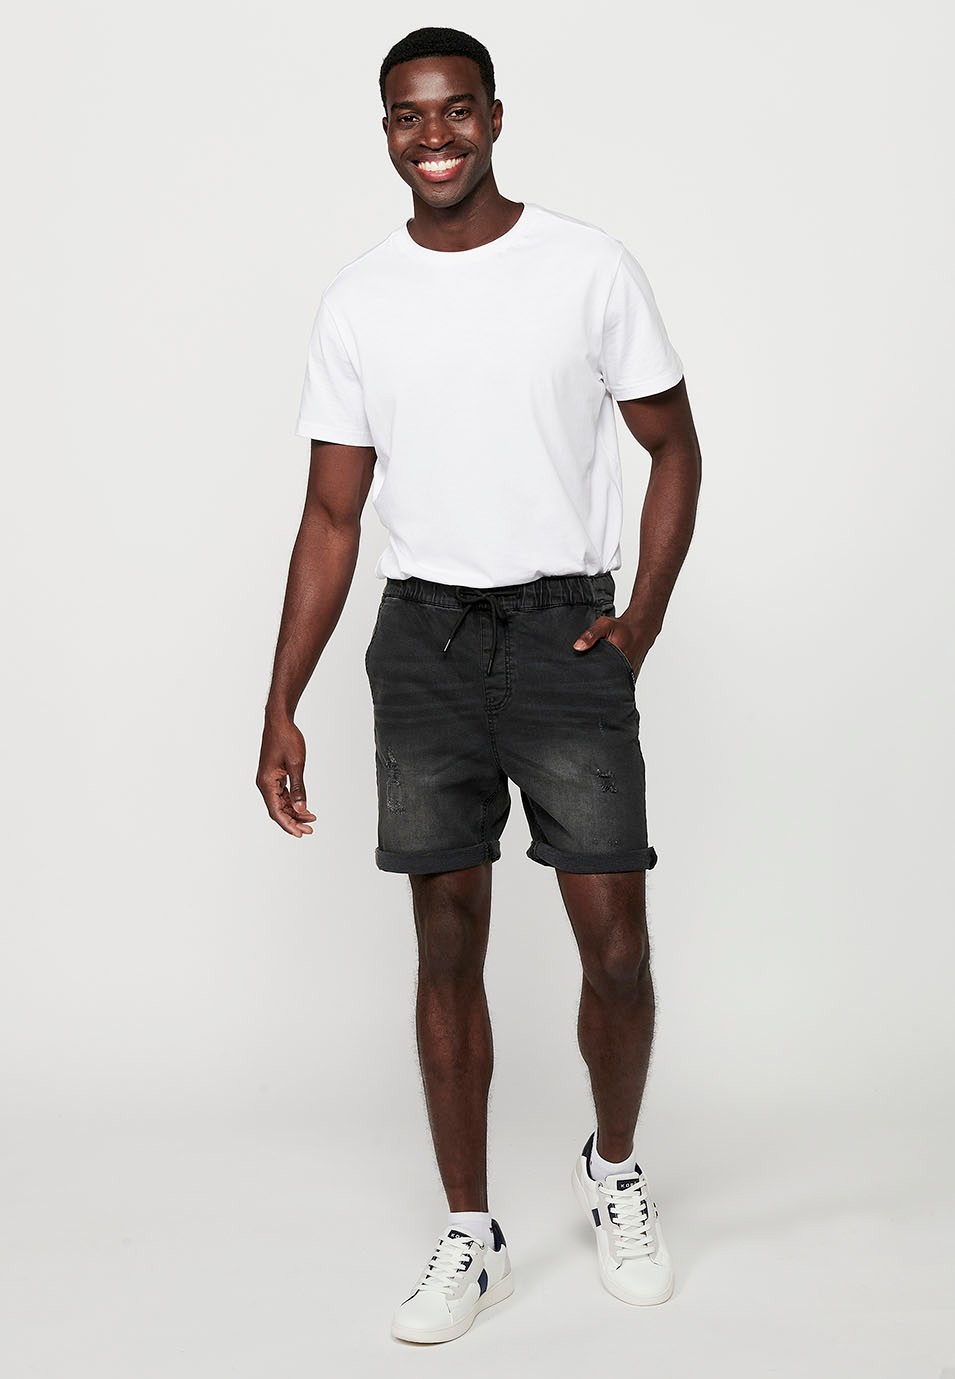 Bermuda Jogger denim finish, black color for men